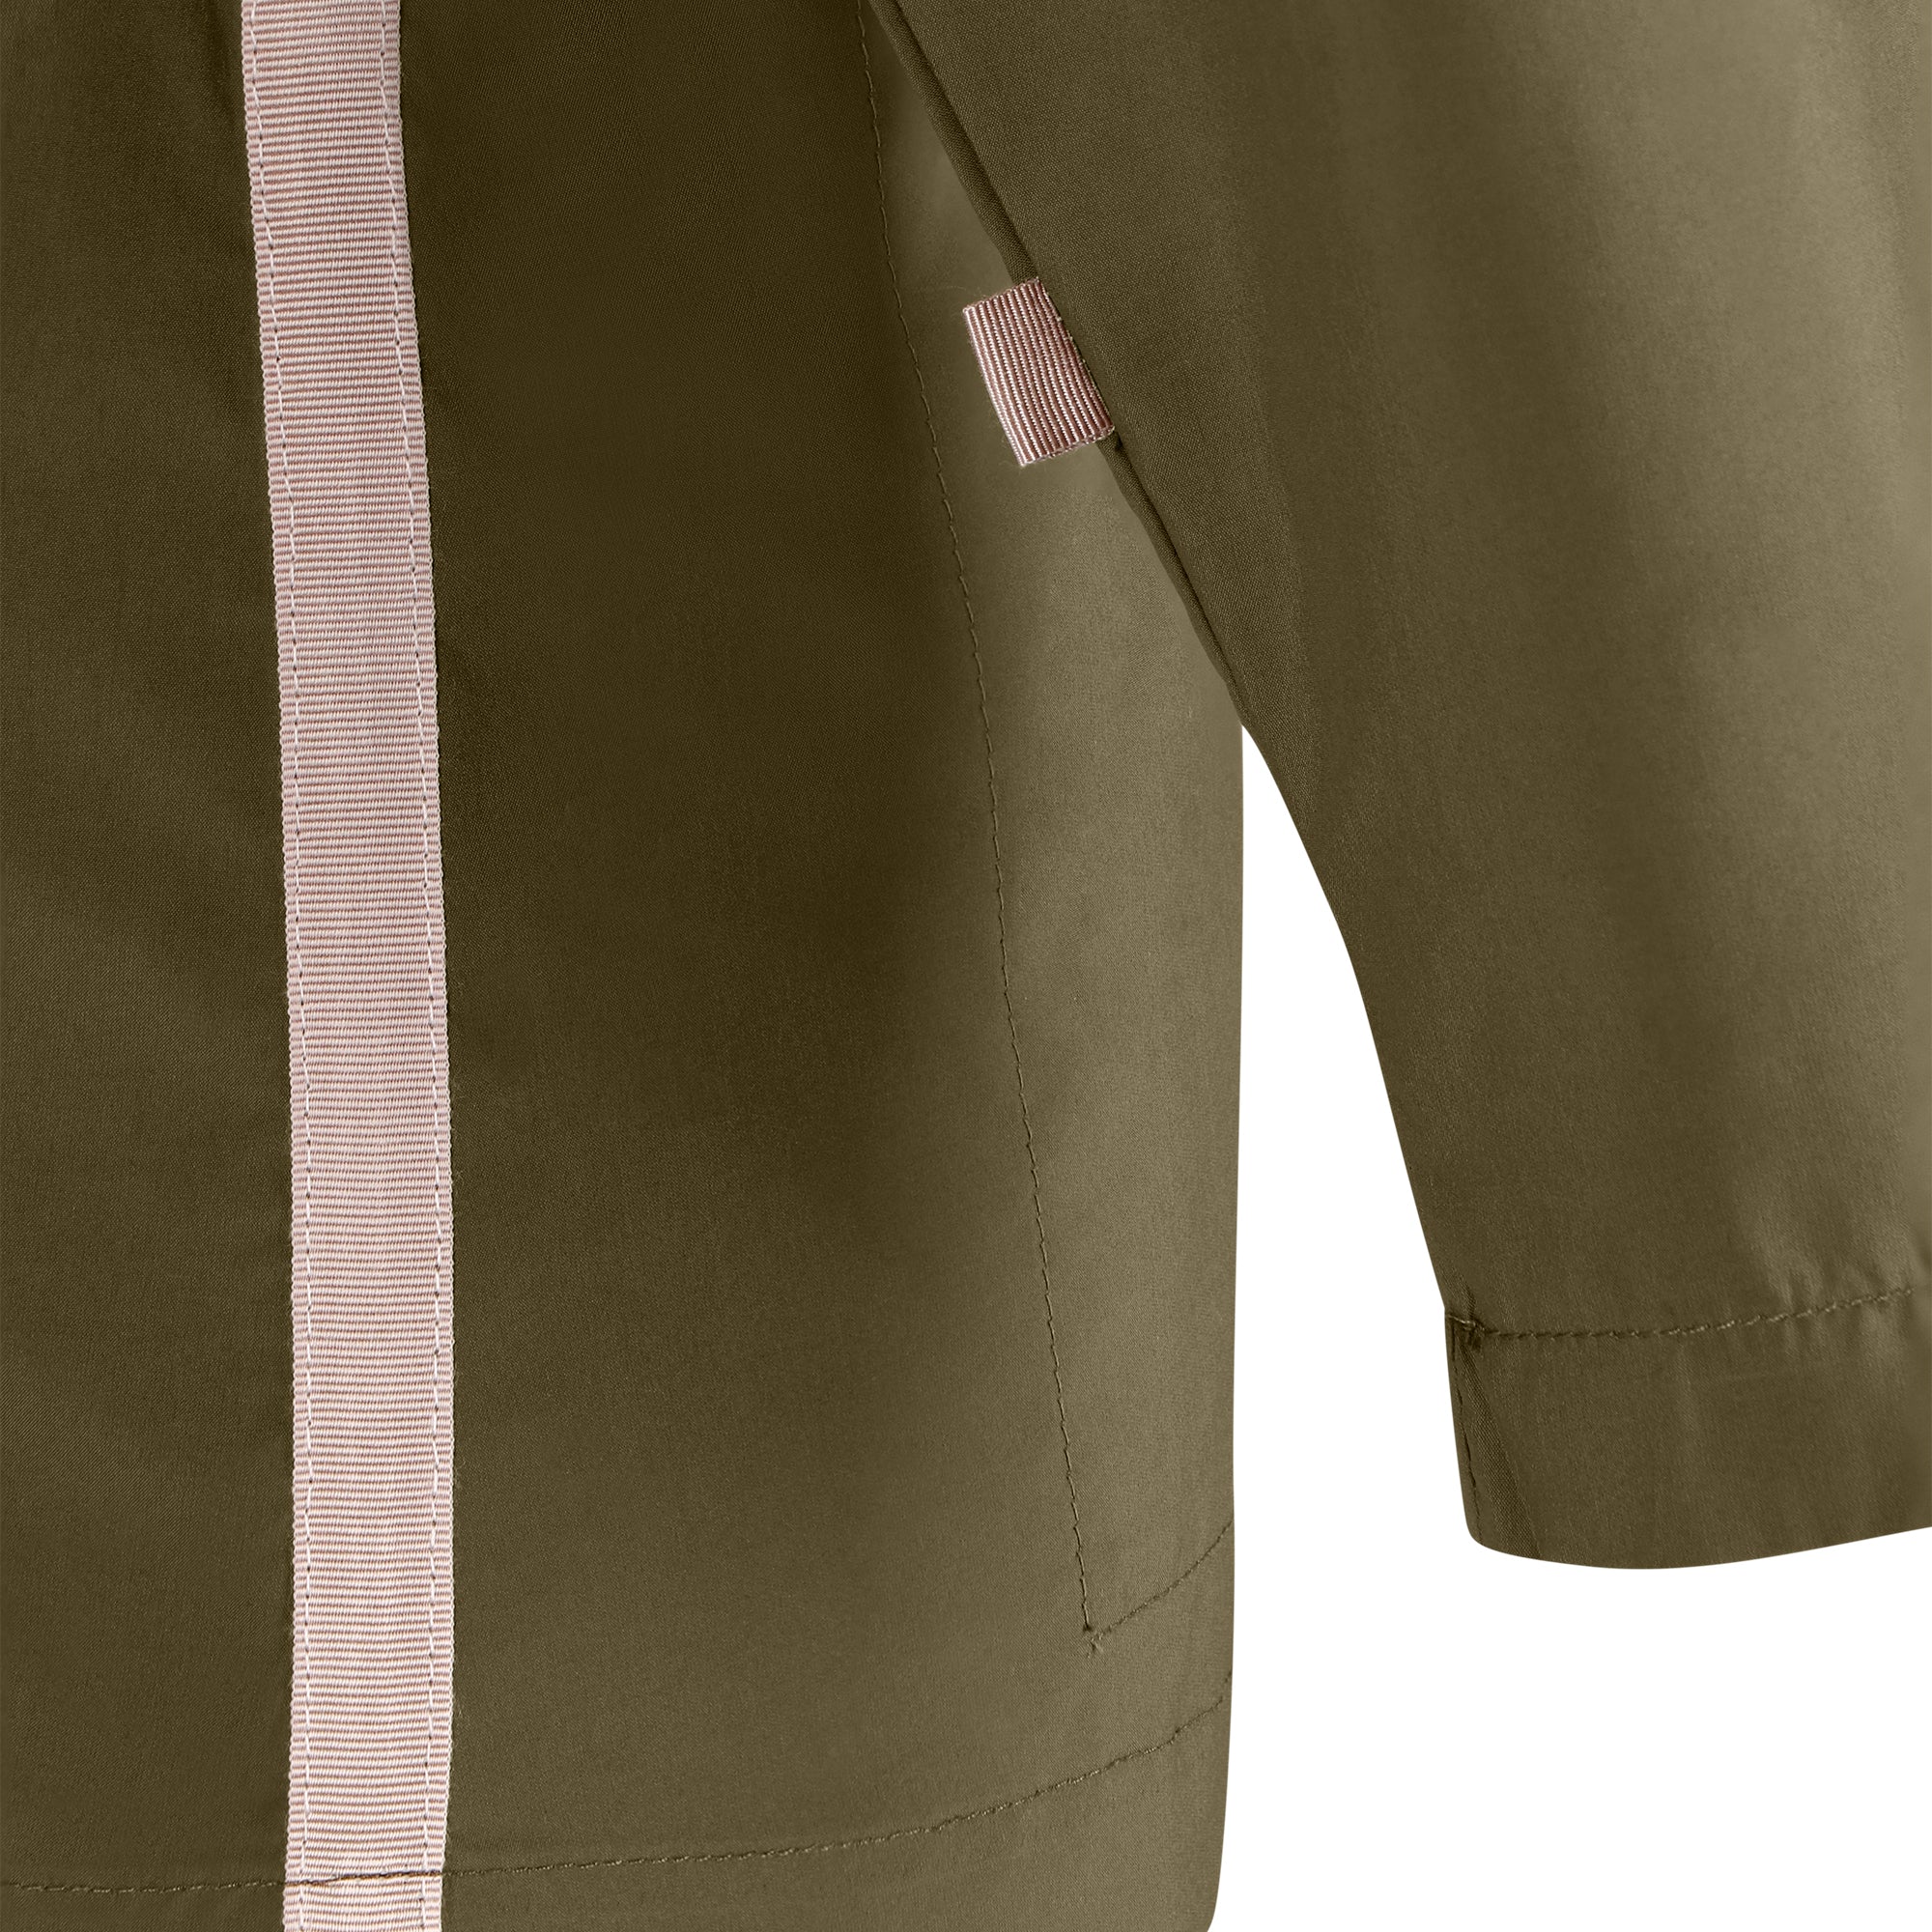 Bise raincoat - Kaki color - sleeve detail